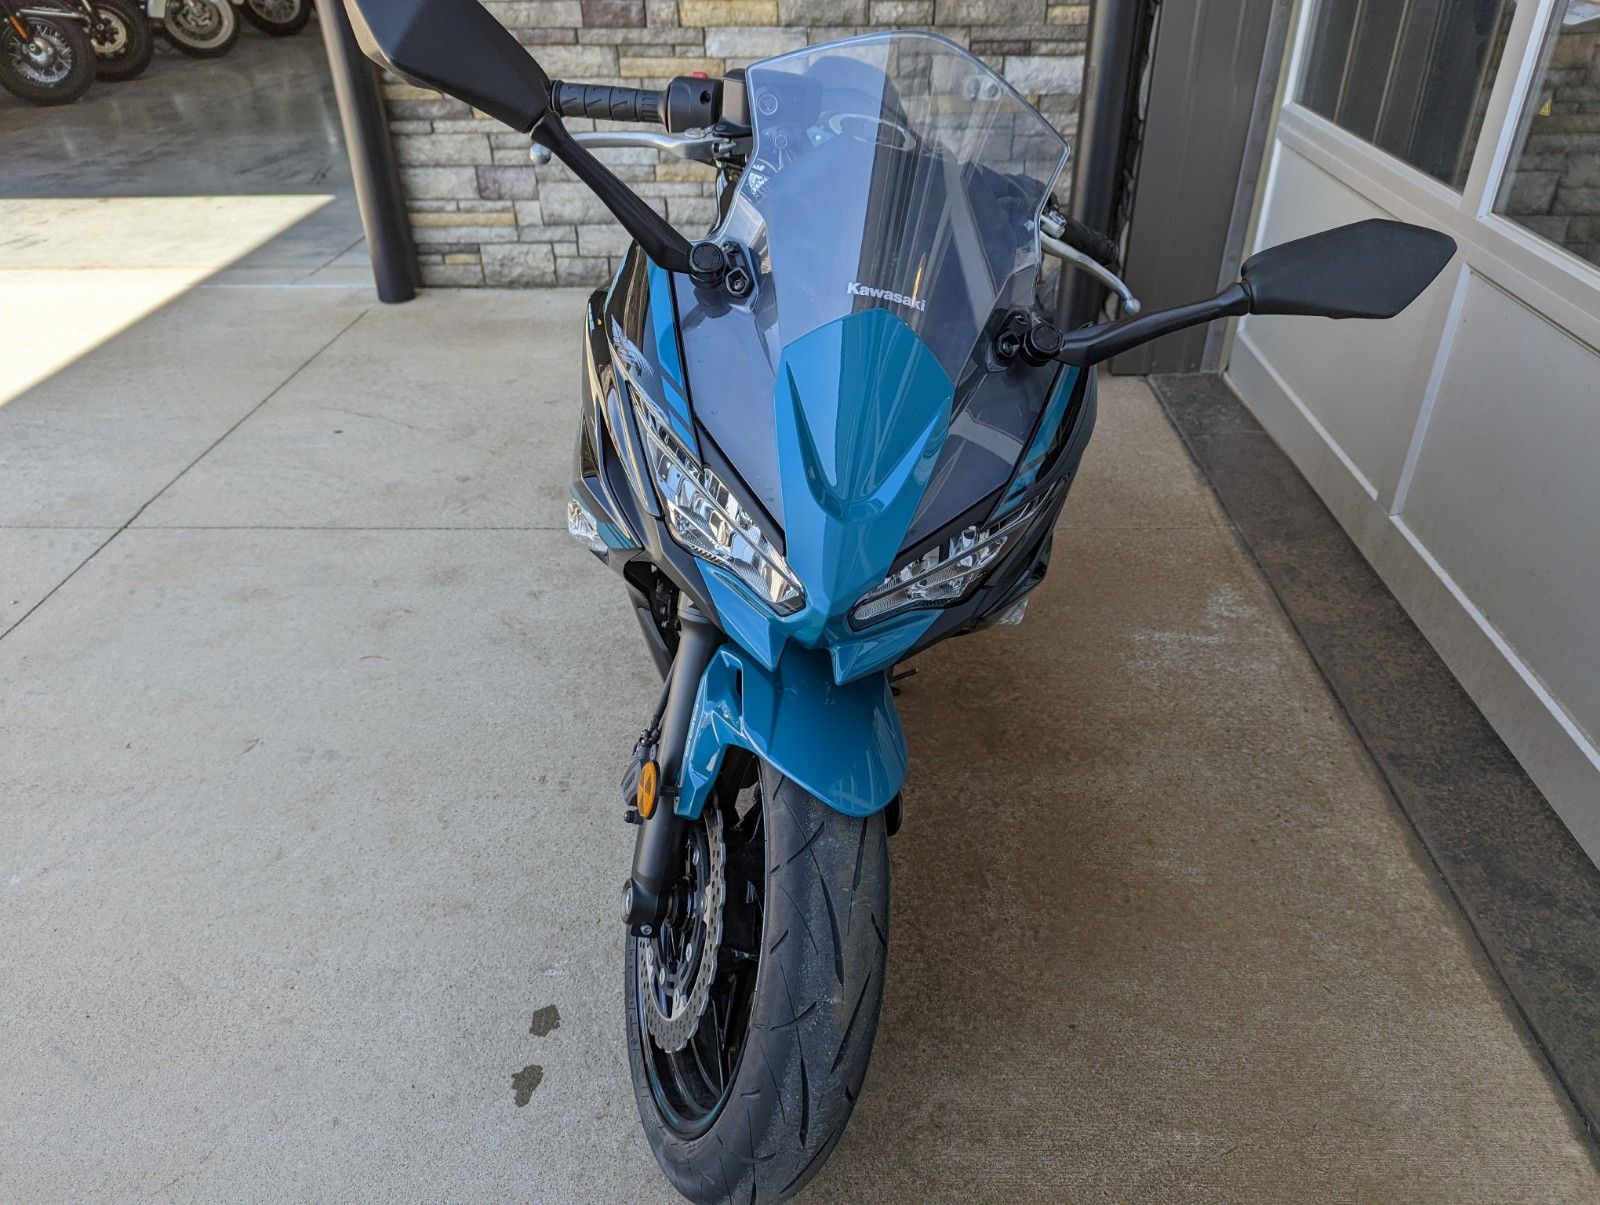 2021 Kawasaki Ninja 650 ABS in Rapid City, South Dakota - Photo 3